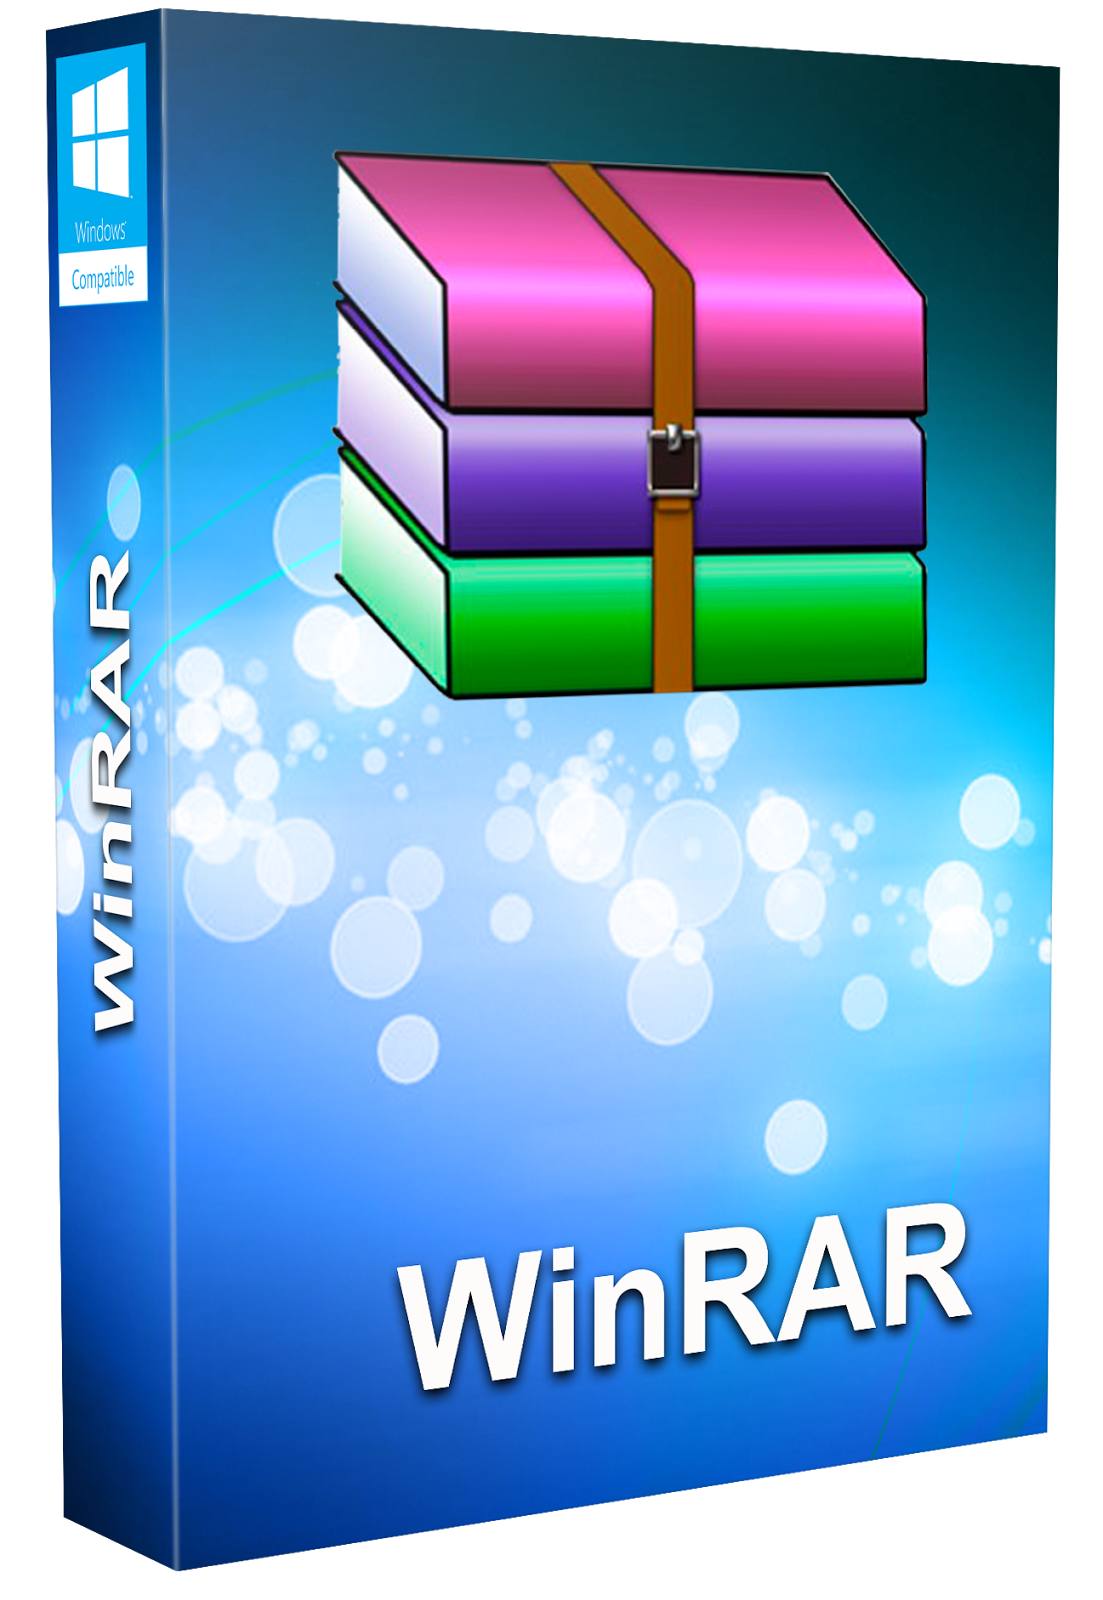 winrar 5.21 full version crack download